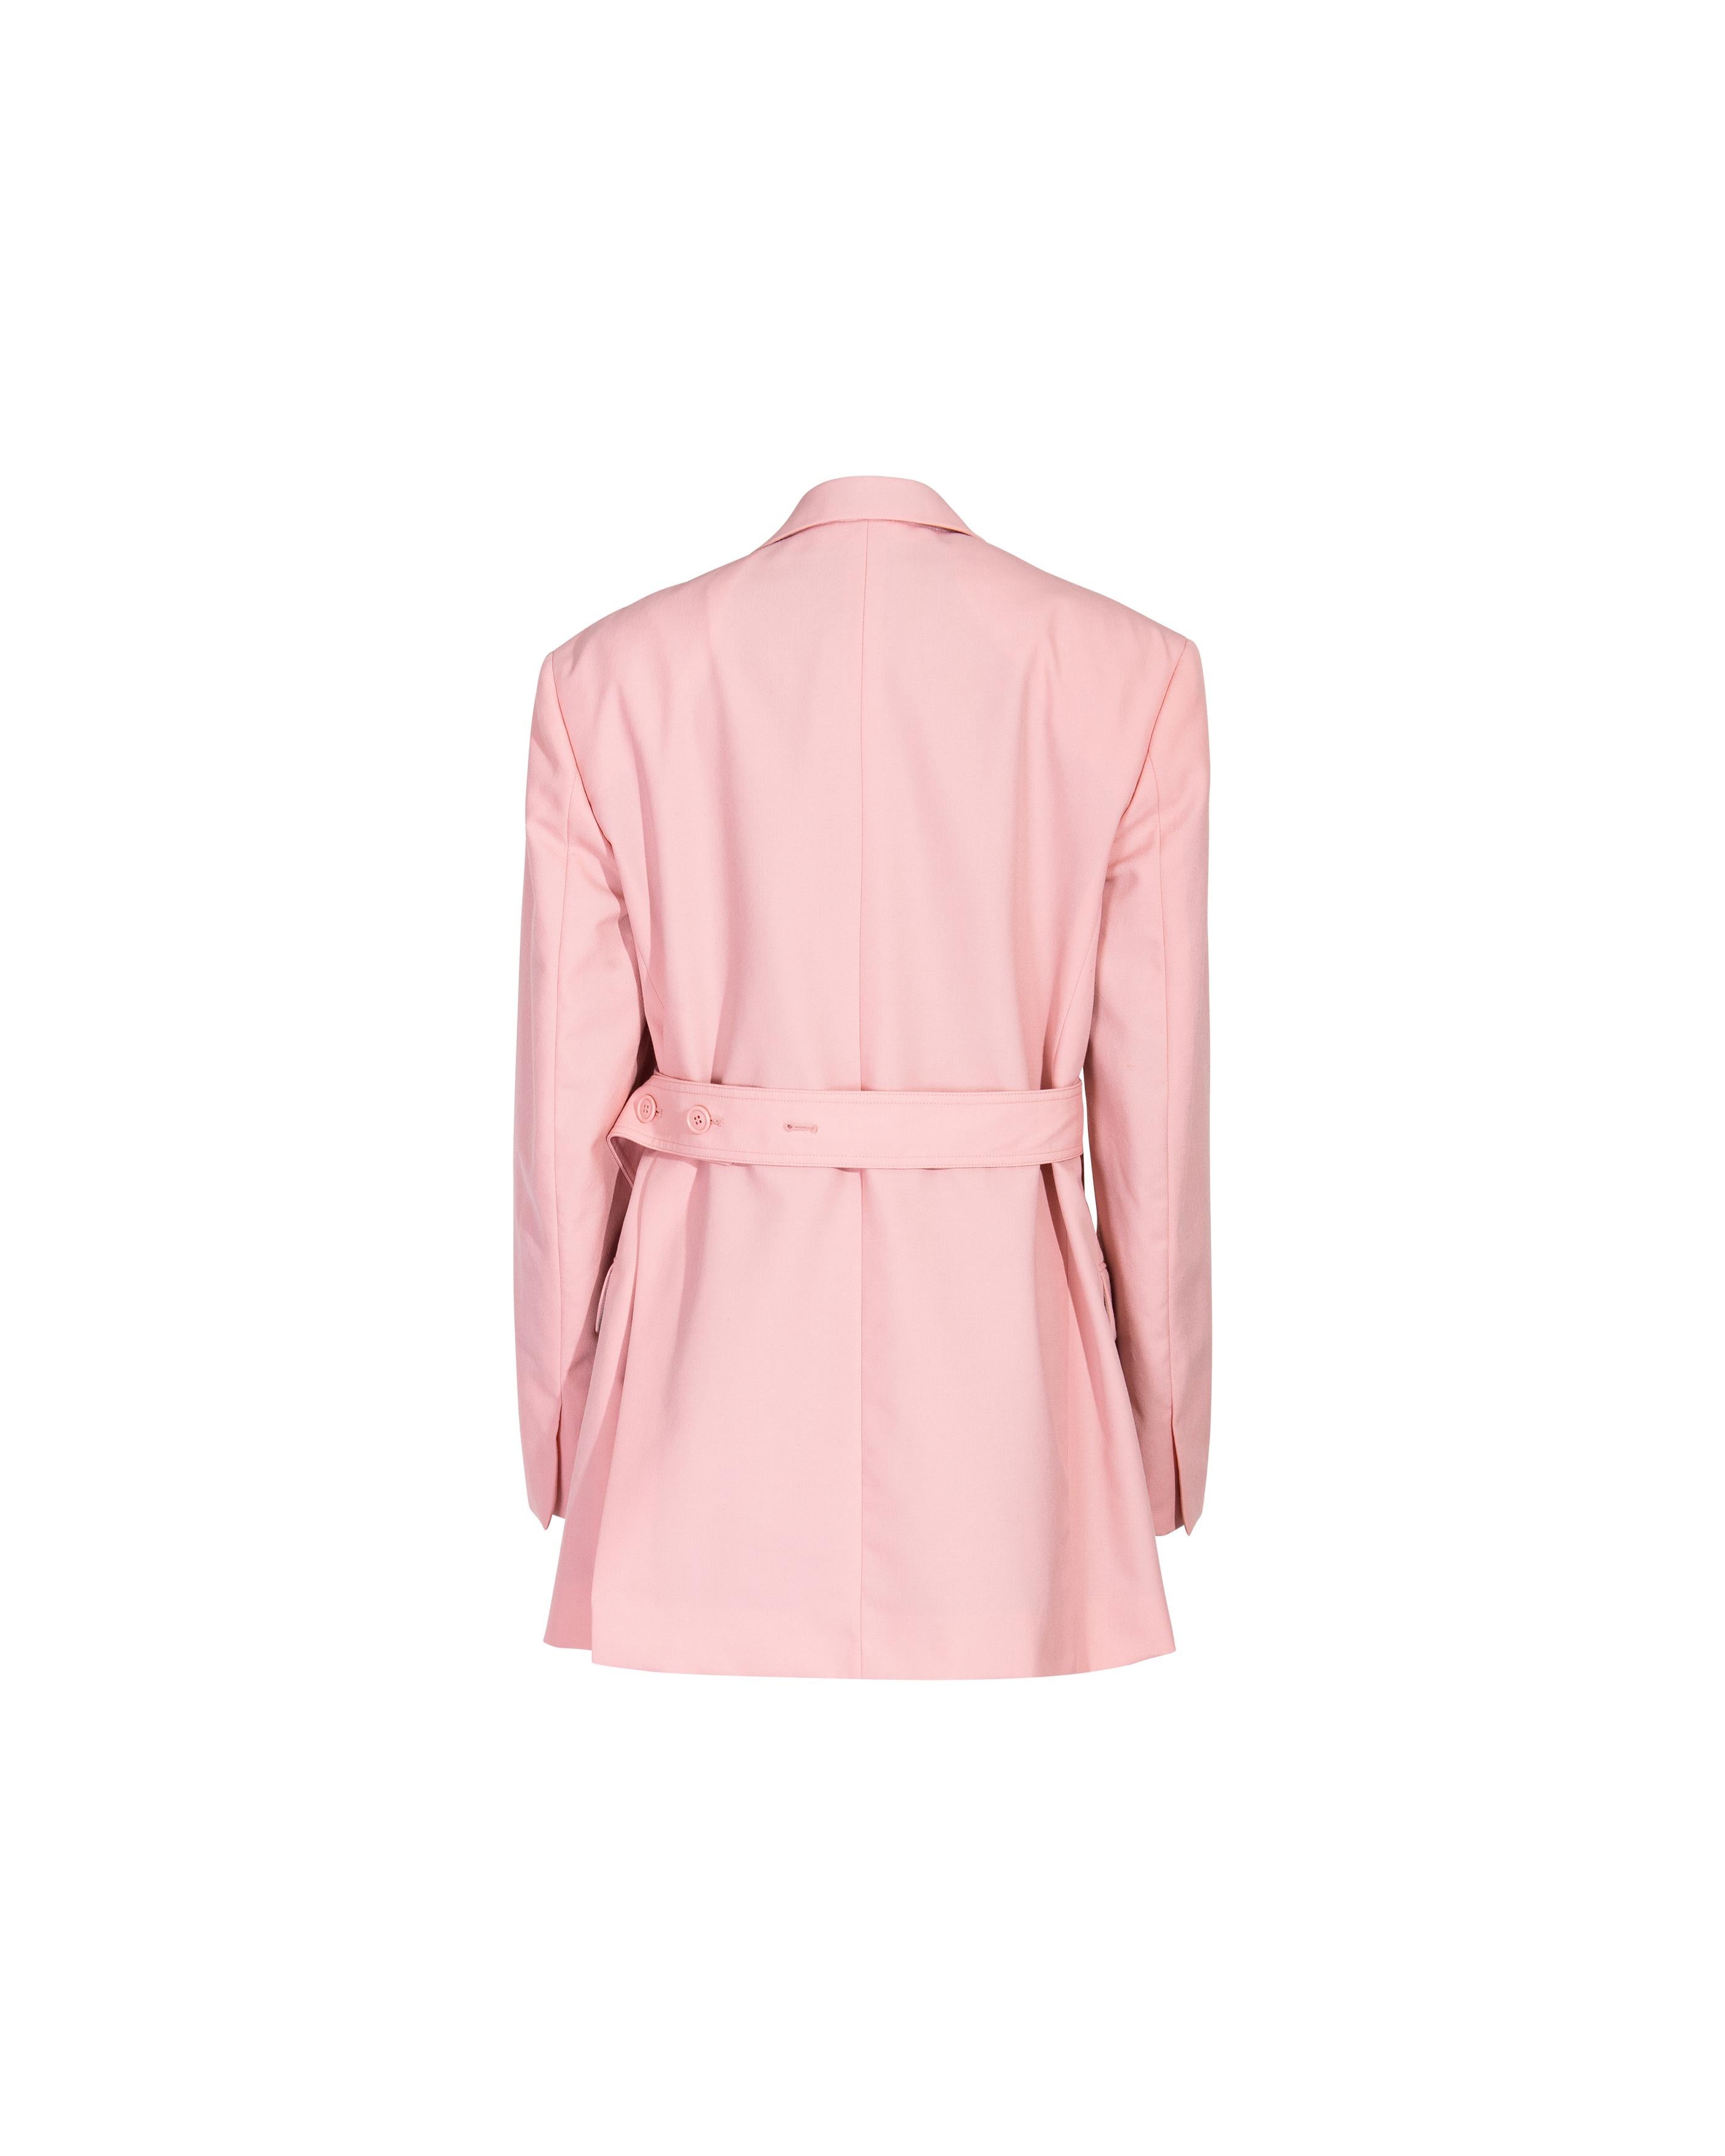 S/S 2018 Old Céline by Phoebe Philo Blush Pink Wool Suit Set 3